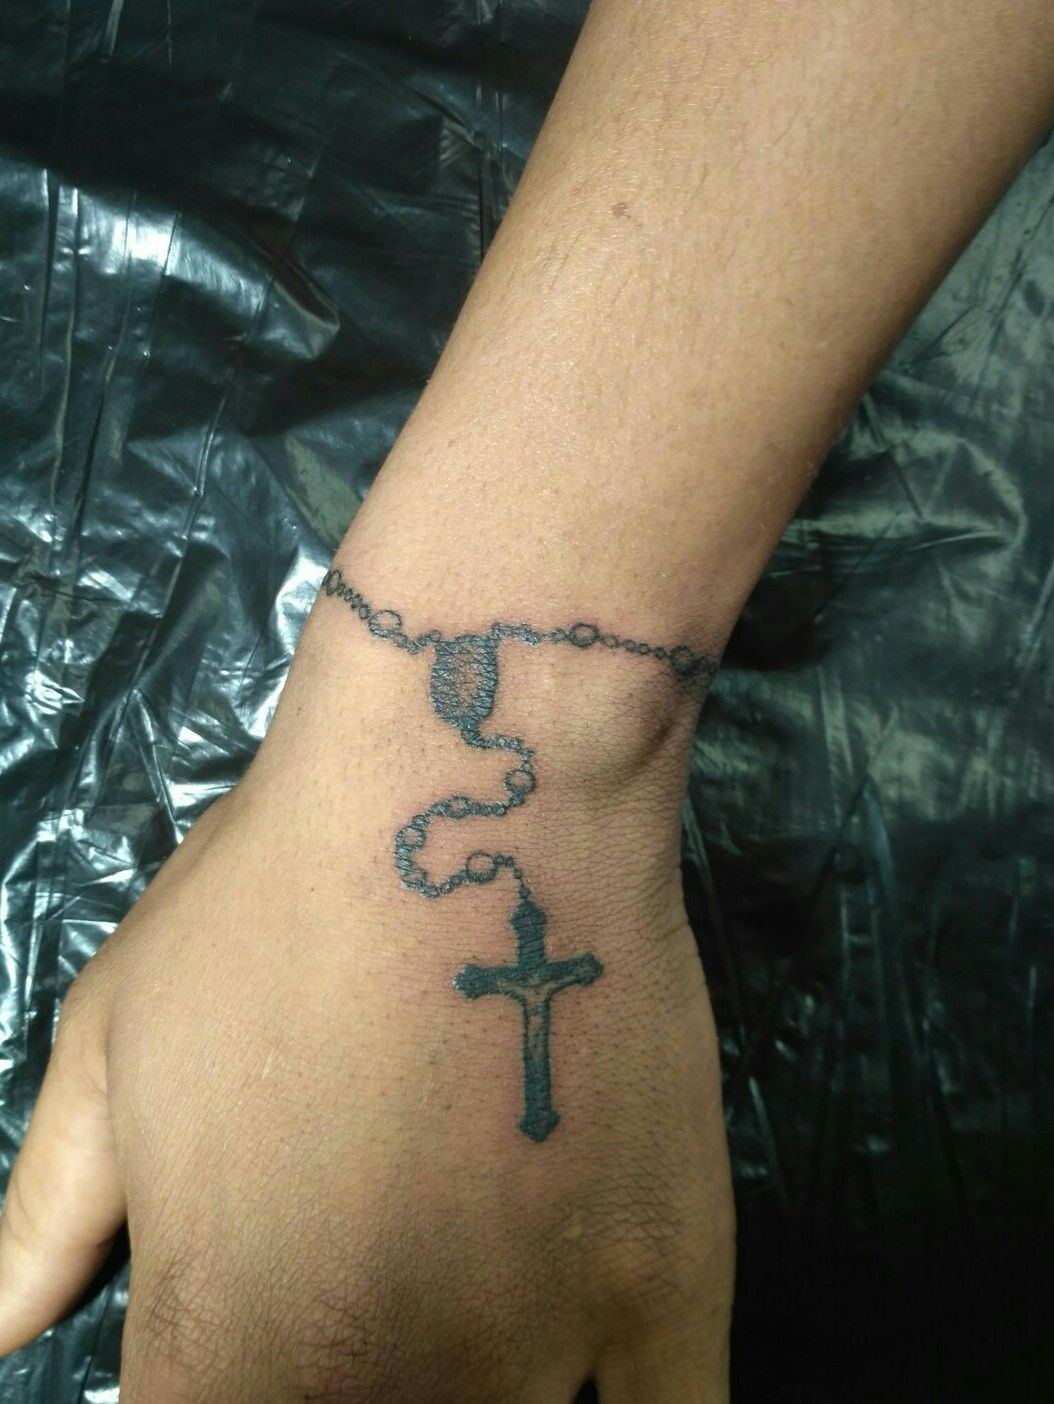 Rosary rose rib tattoo by robm8686 on DeviantArt